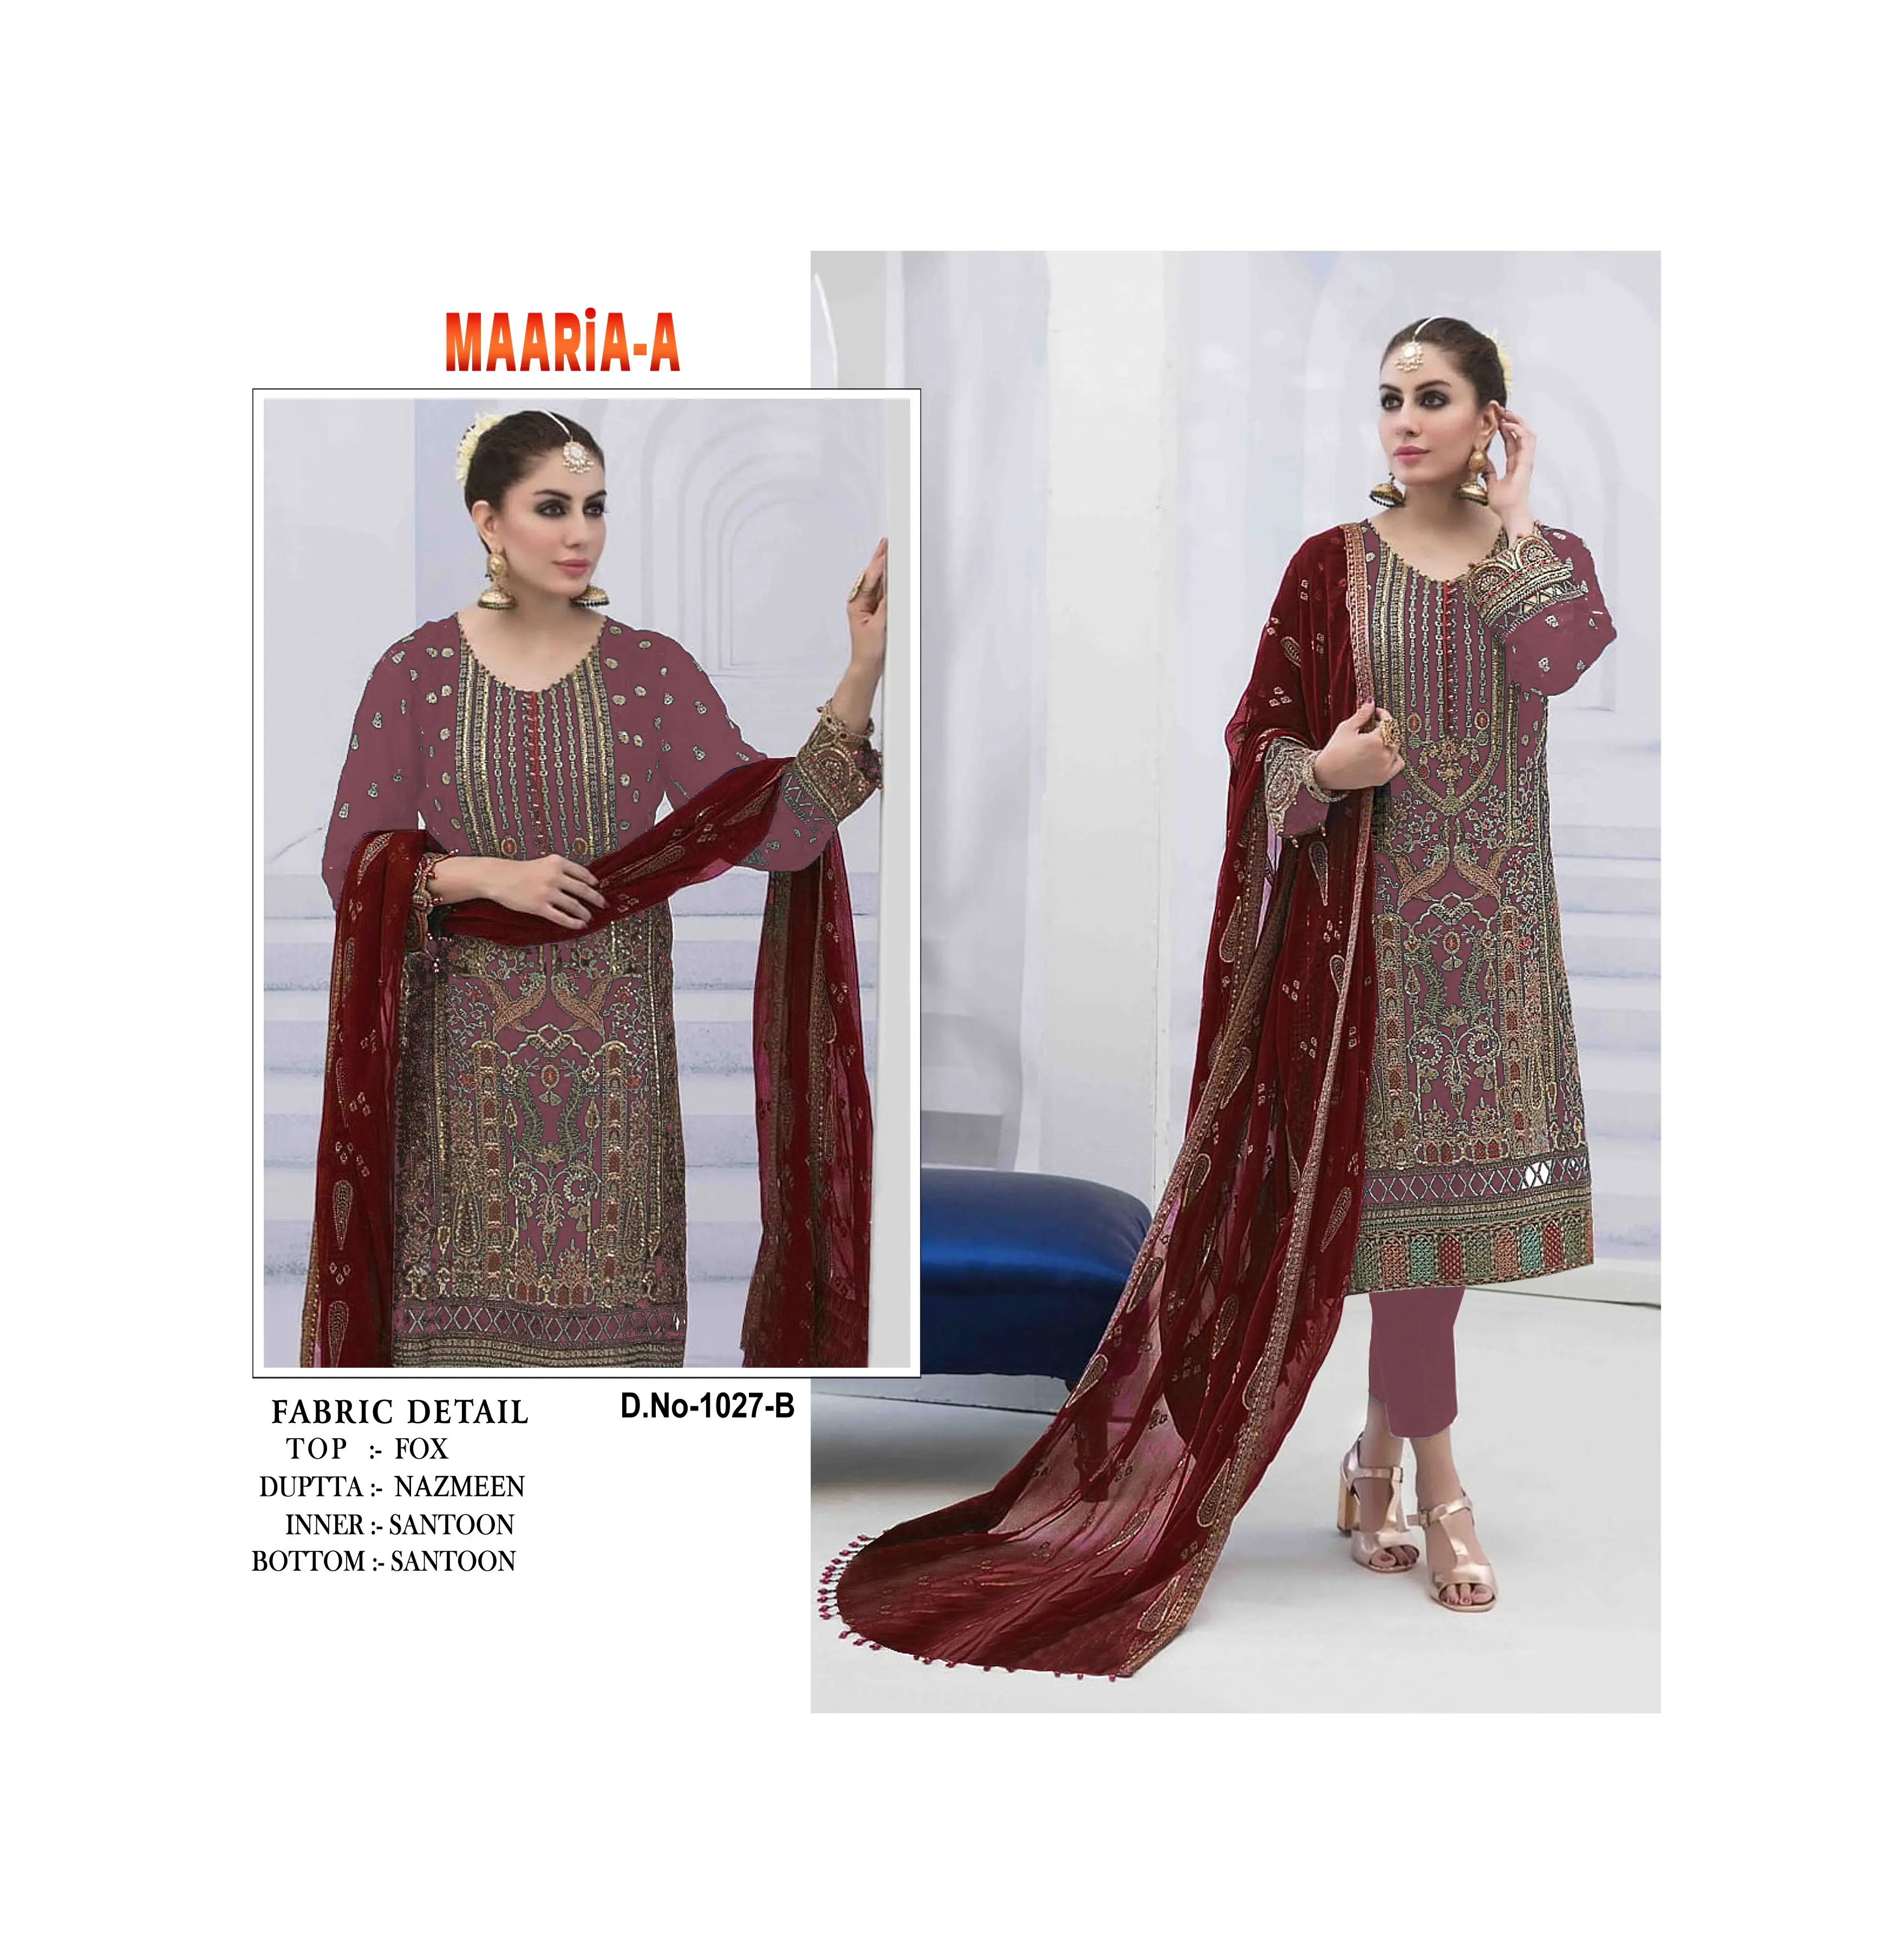 Dernier modèle de Salwar Kameez de style indien et pakistanais avec broderie lourde Dupatta avec robe Salwar Kameez